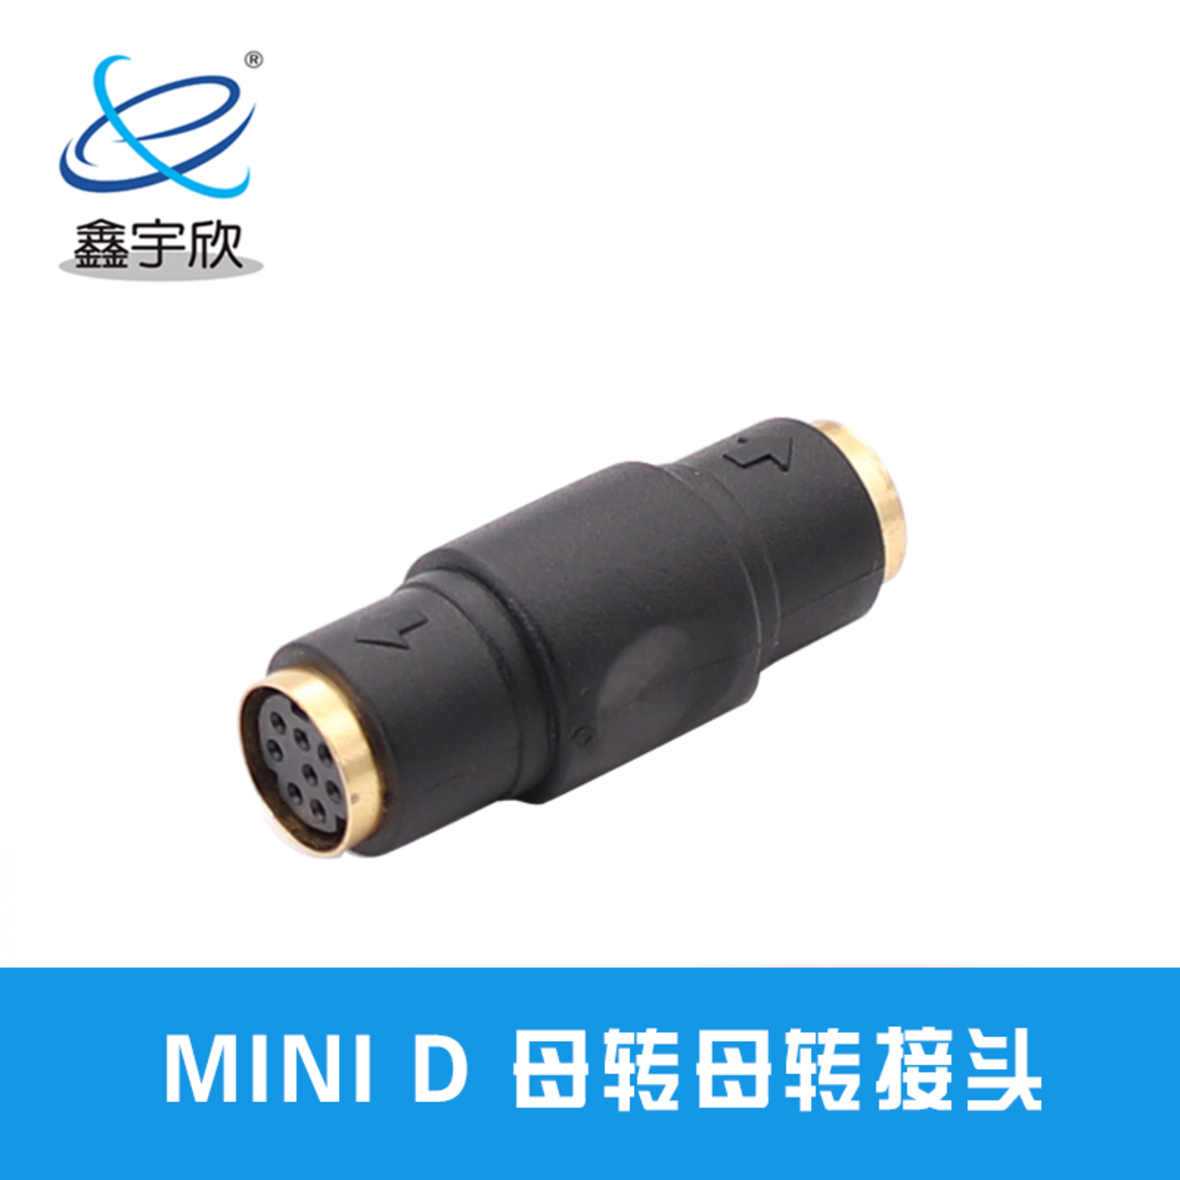  MINI DIN 8PIN视频转接头 MD8P母对母 转换器 视频信号延长